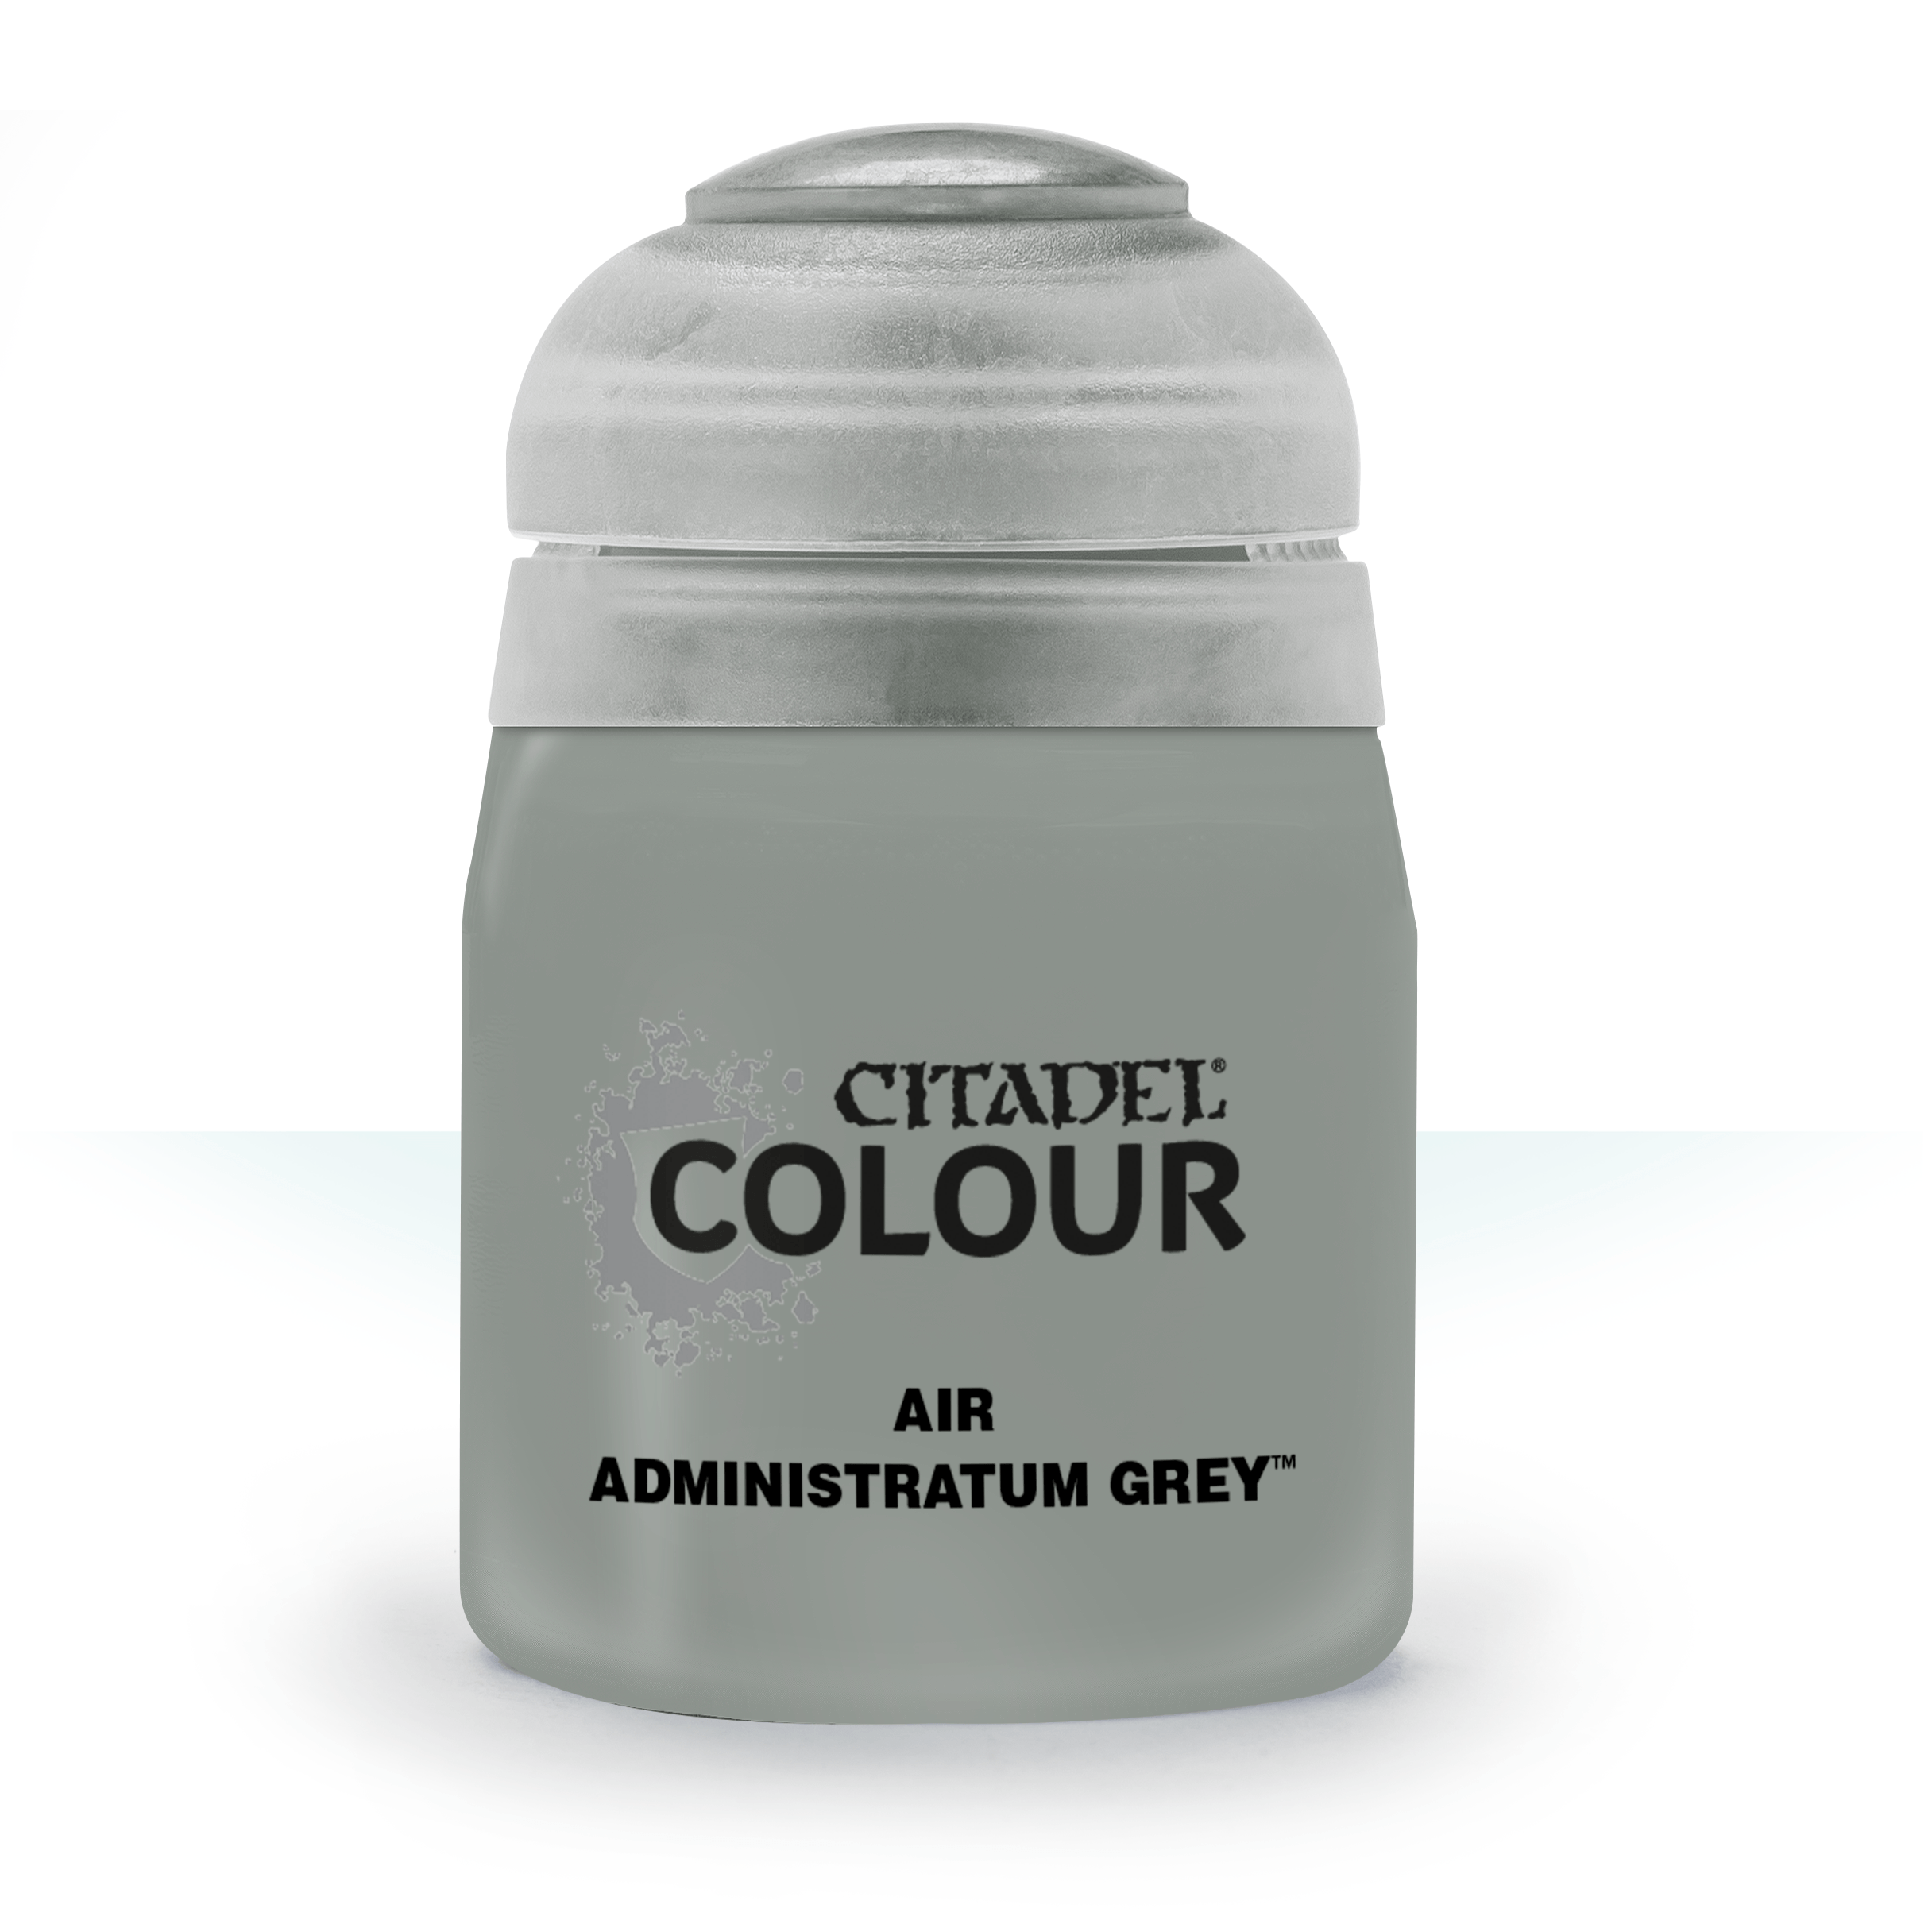 Administratum Grey - Citadel Air Colour